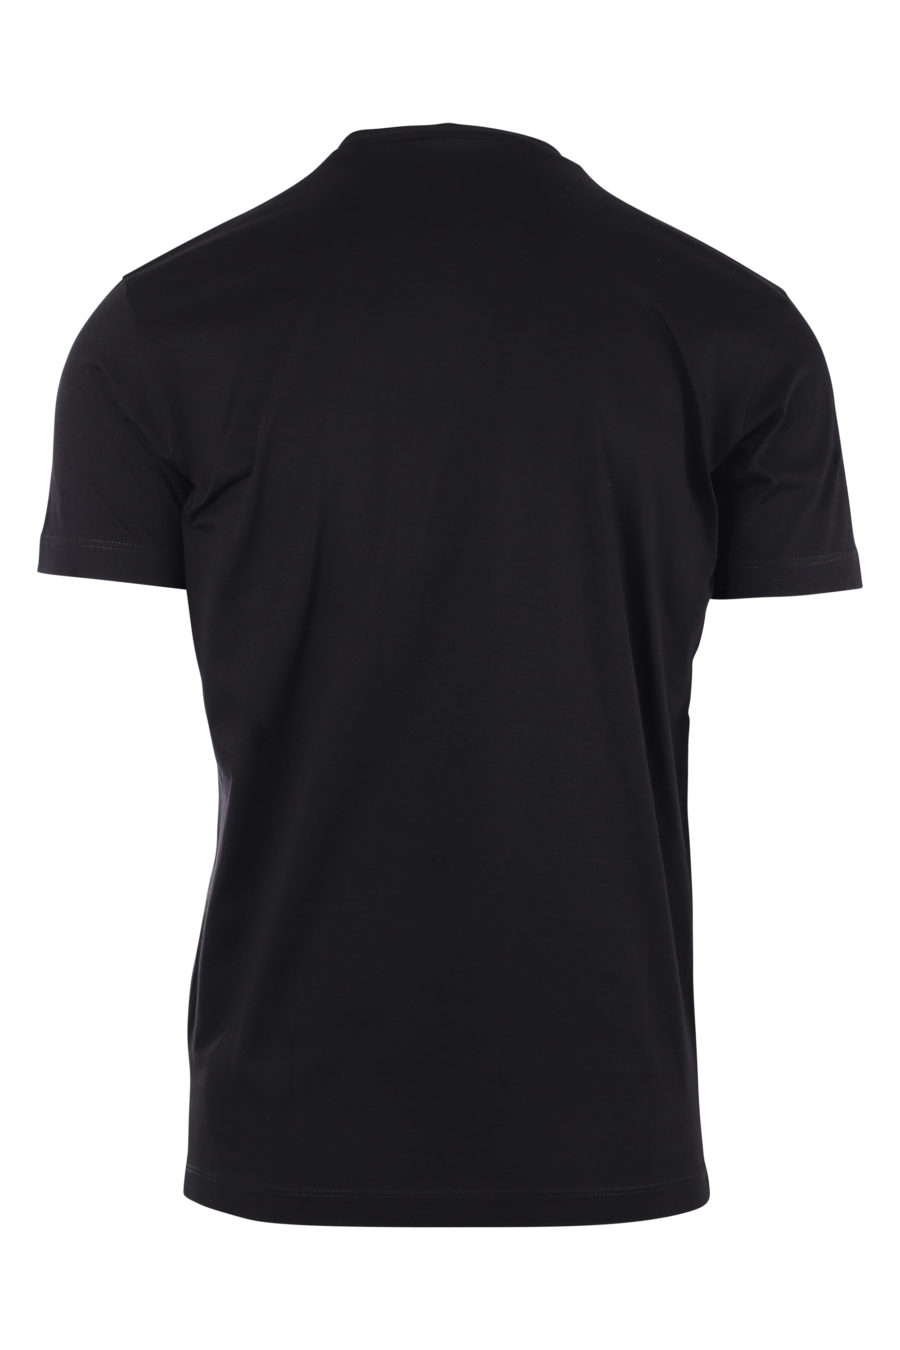 T-shirt noir avec logo ceresio 9 - IMG 9728